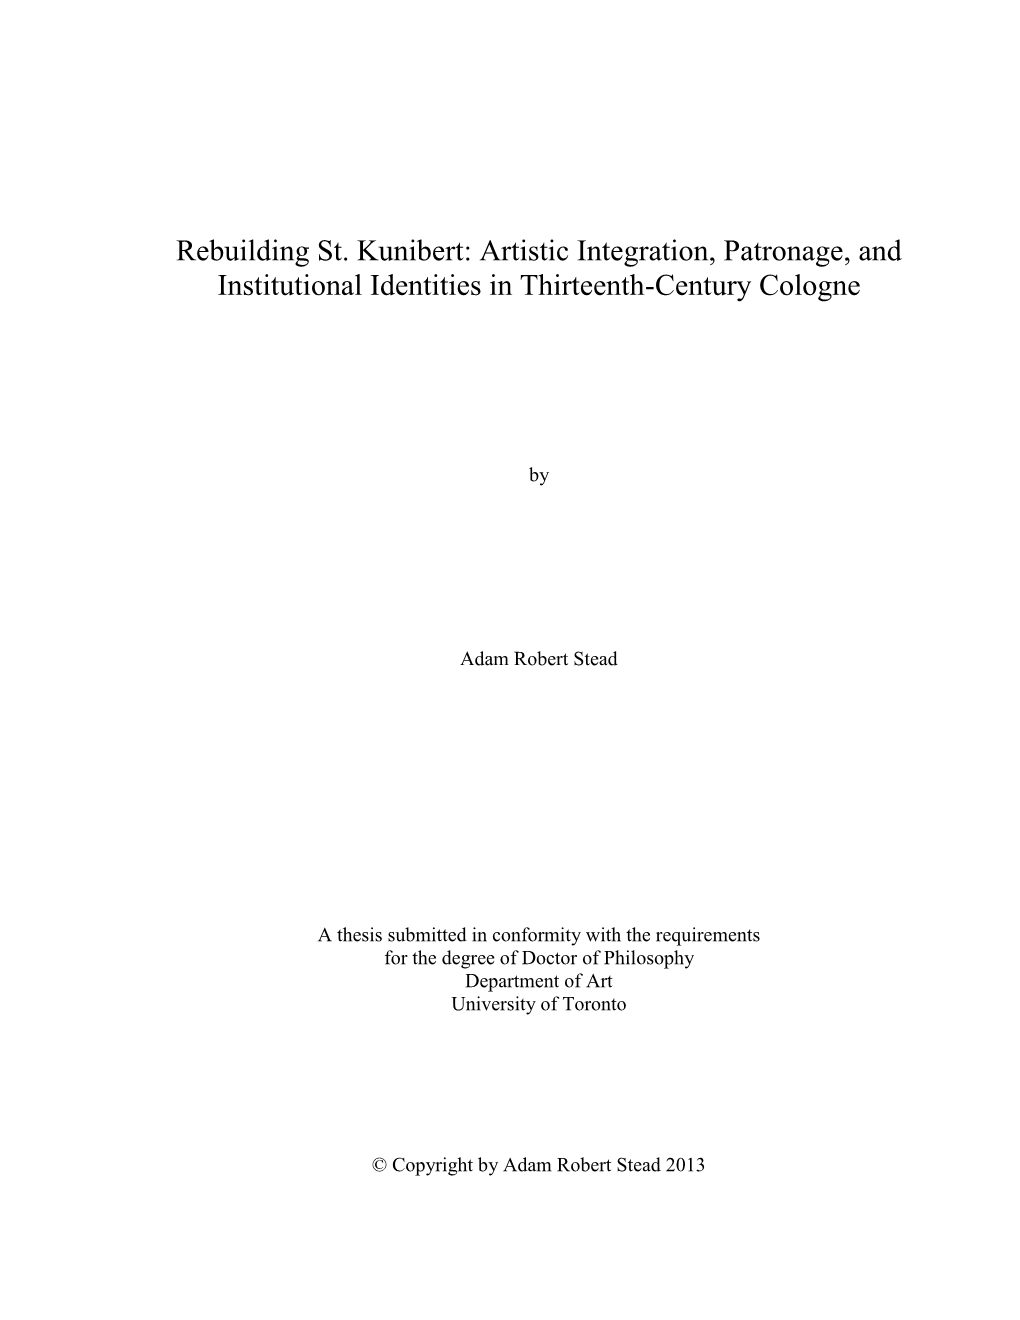 Rebuilding St. Kunibert: Artistic Integration, Patronage, and Institutional Identities in Thirteenth-Century Cologne